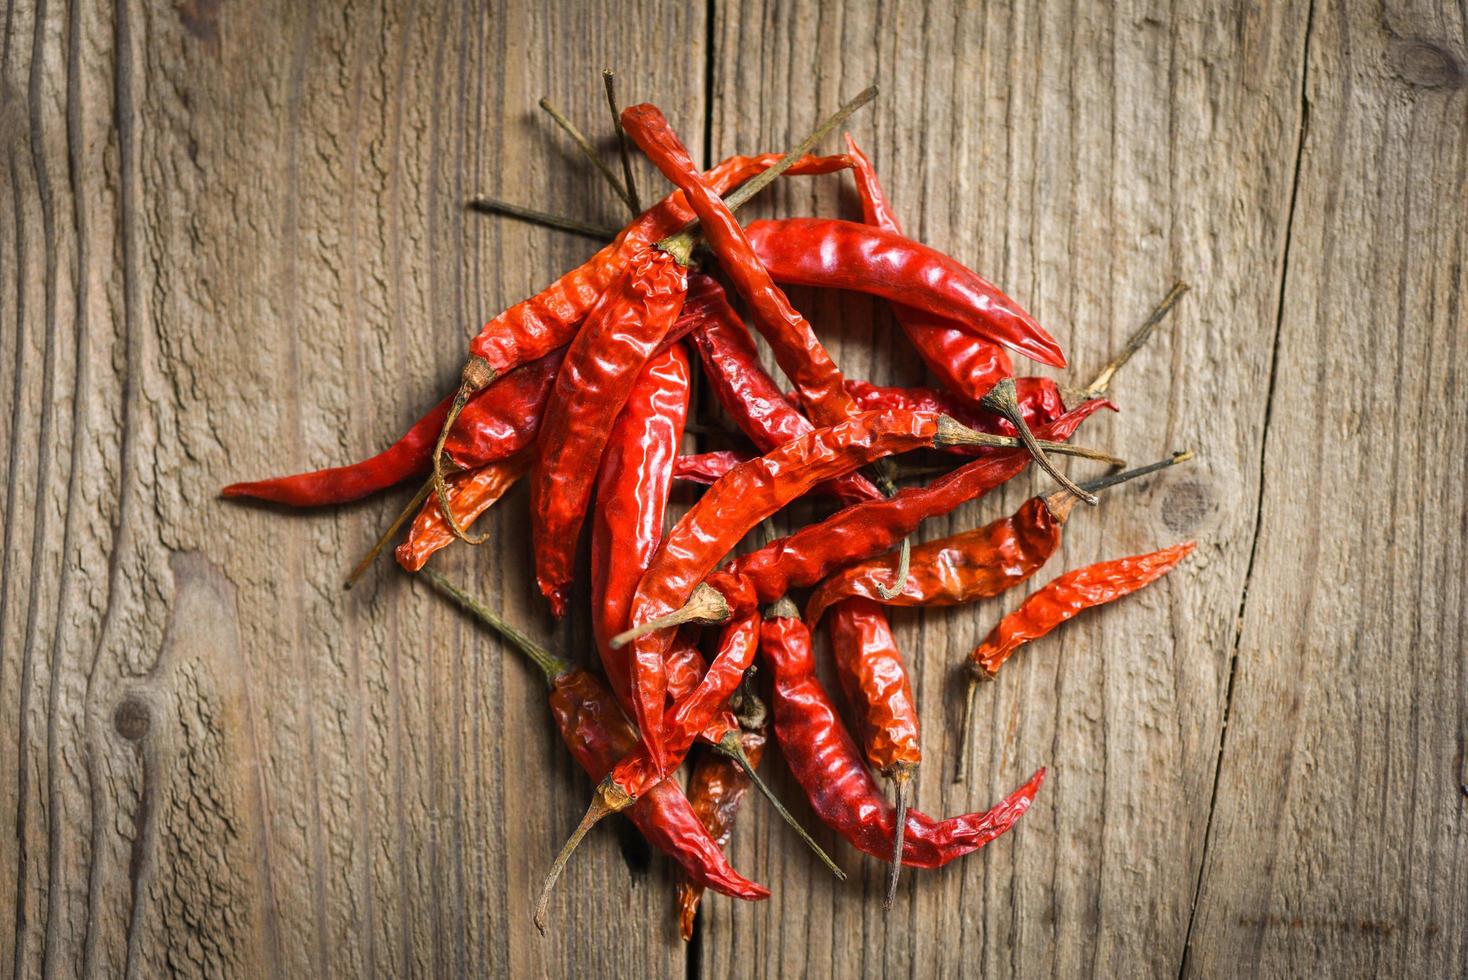 torkad chili på träbakgrund - röd torkad chilipeppar cayenne fiende tillagad asiatisk picy mat foto